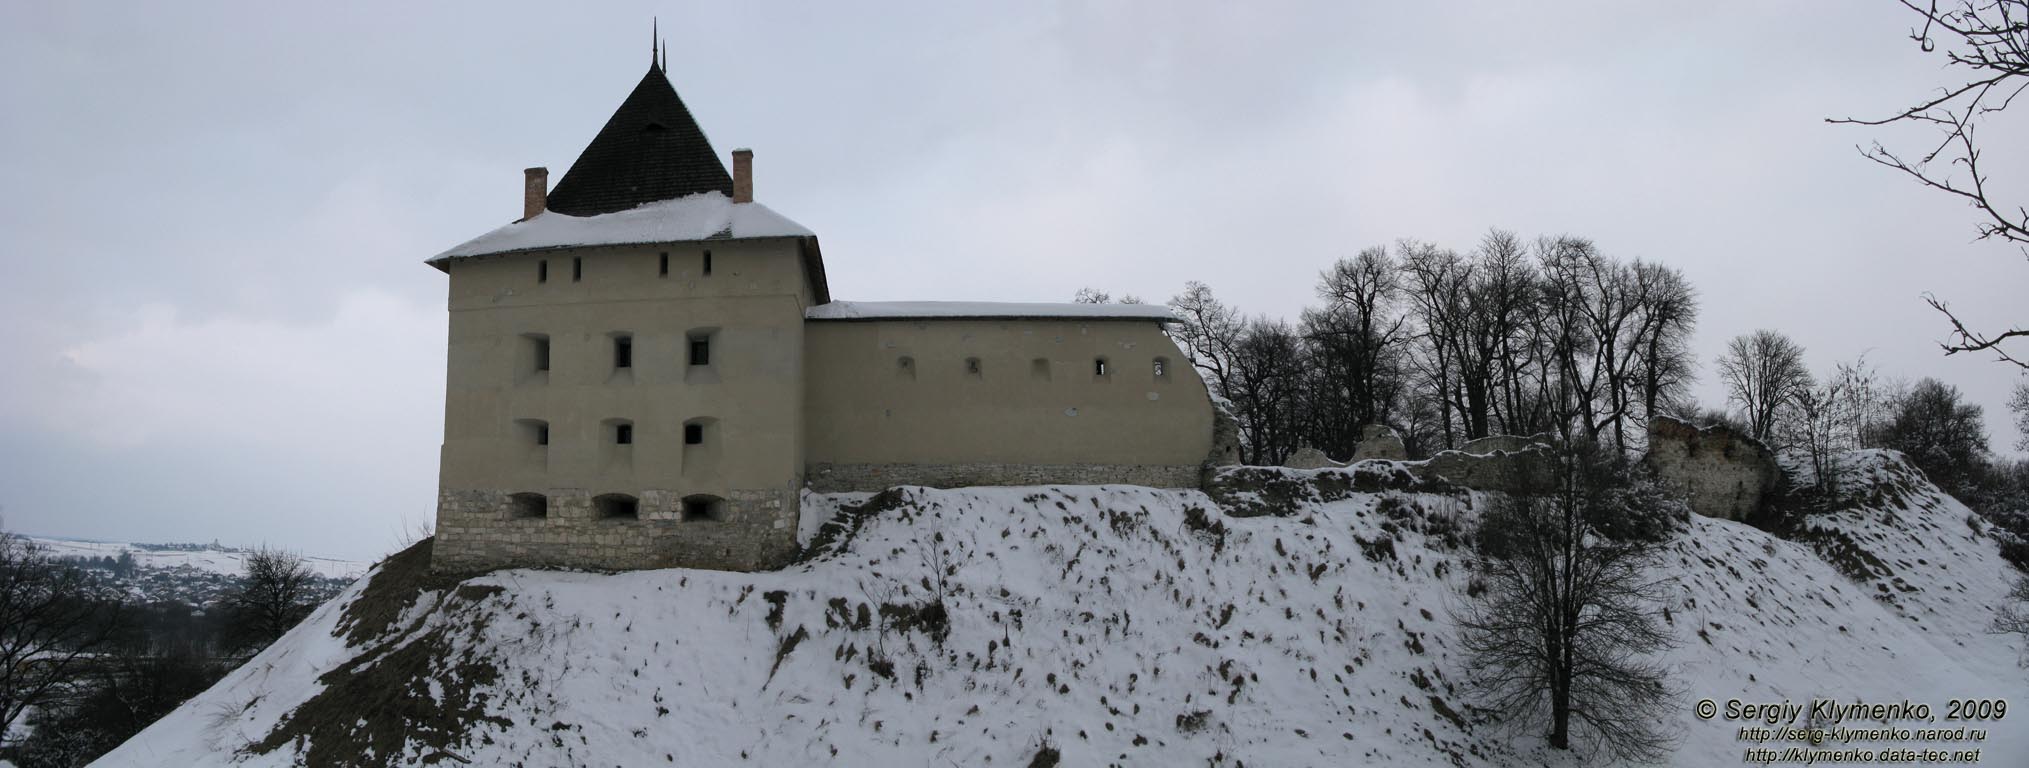 Галич. Фото. Восстановленная башя Галицкого замка вблизи (вид снаружи).